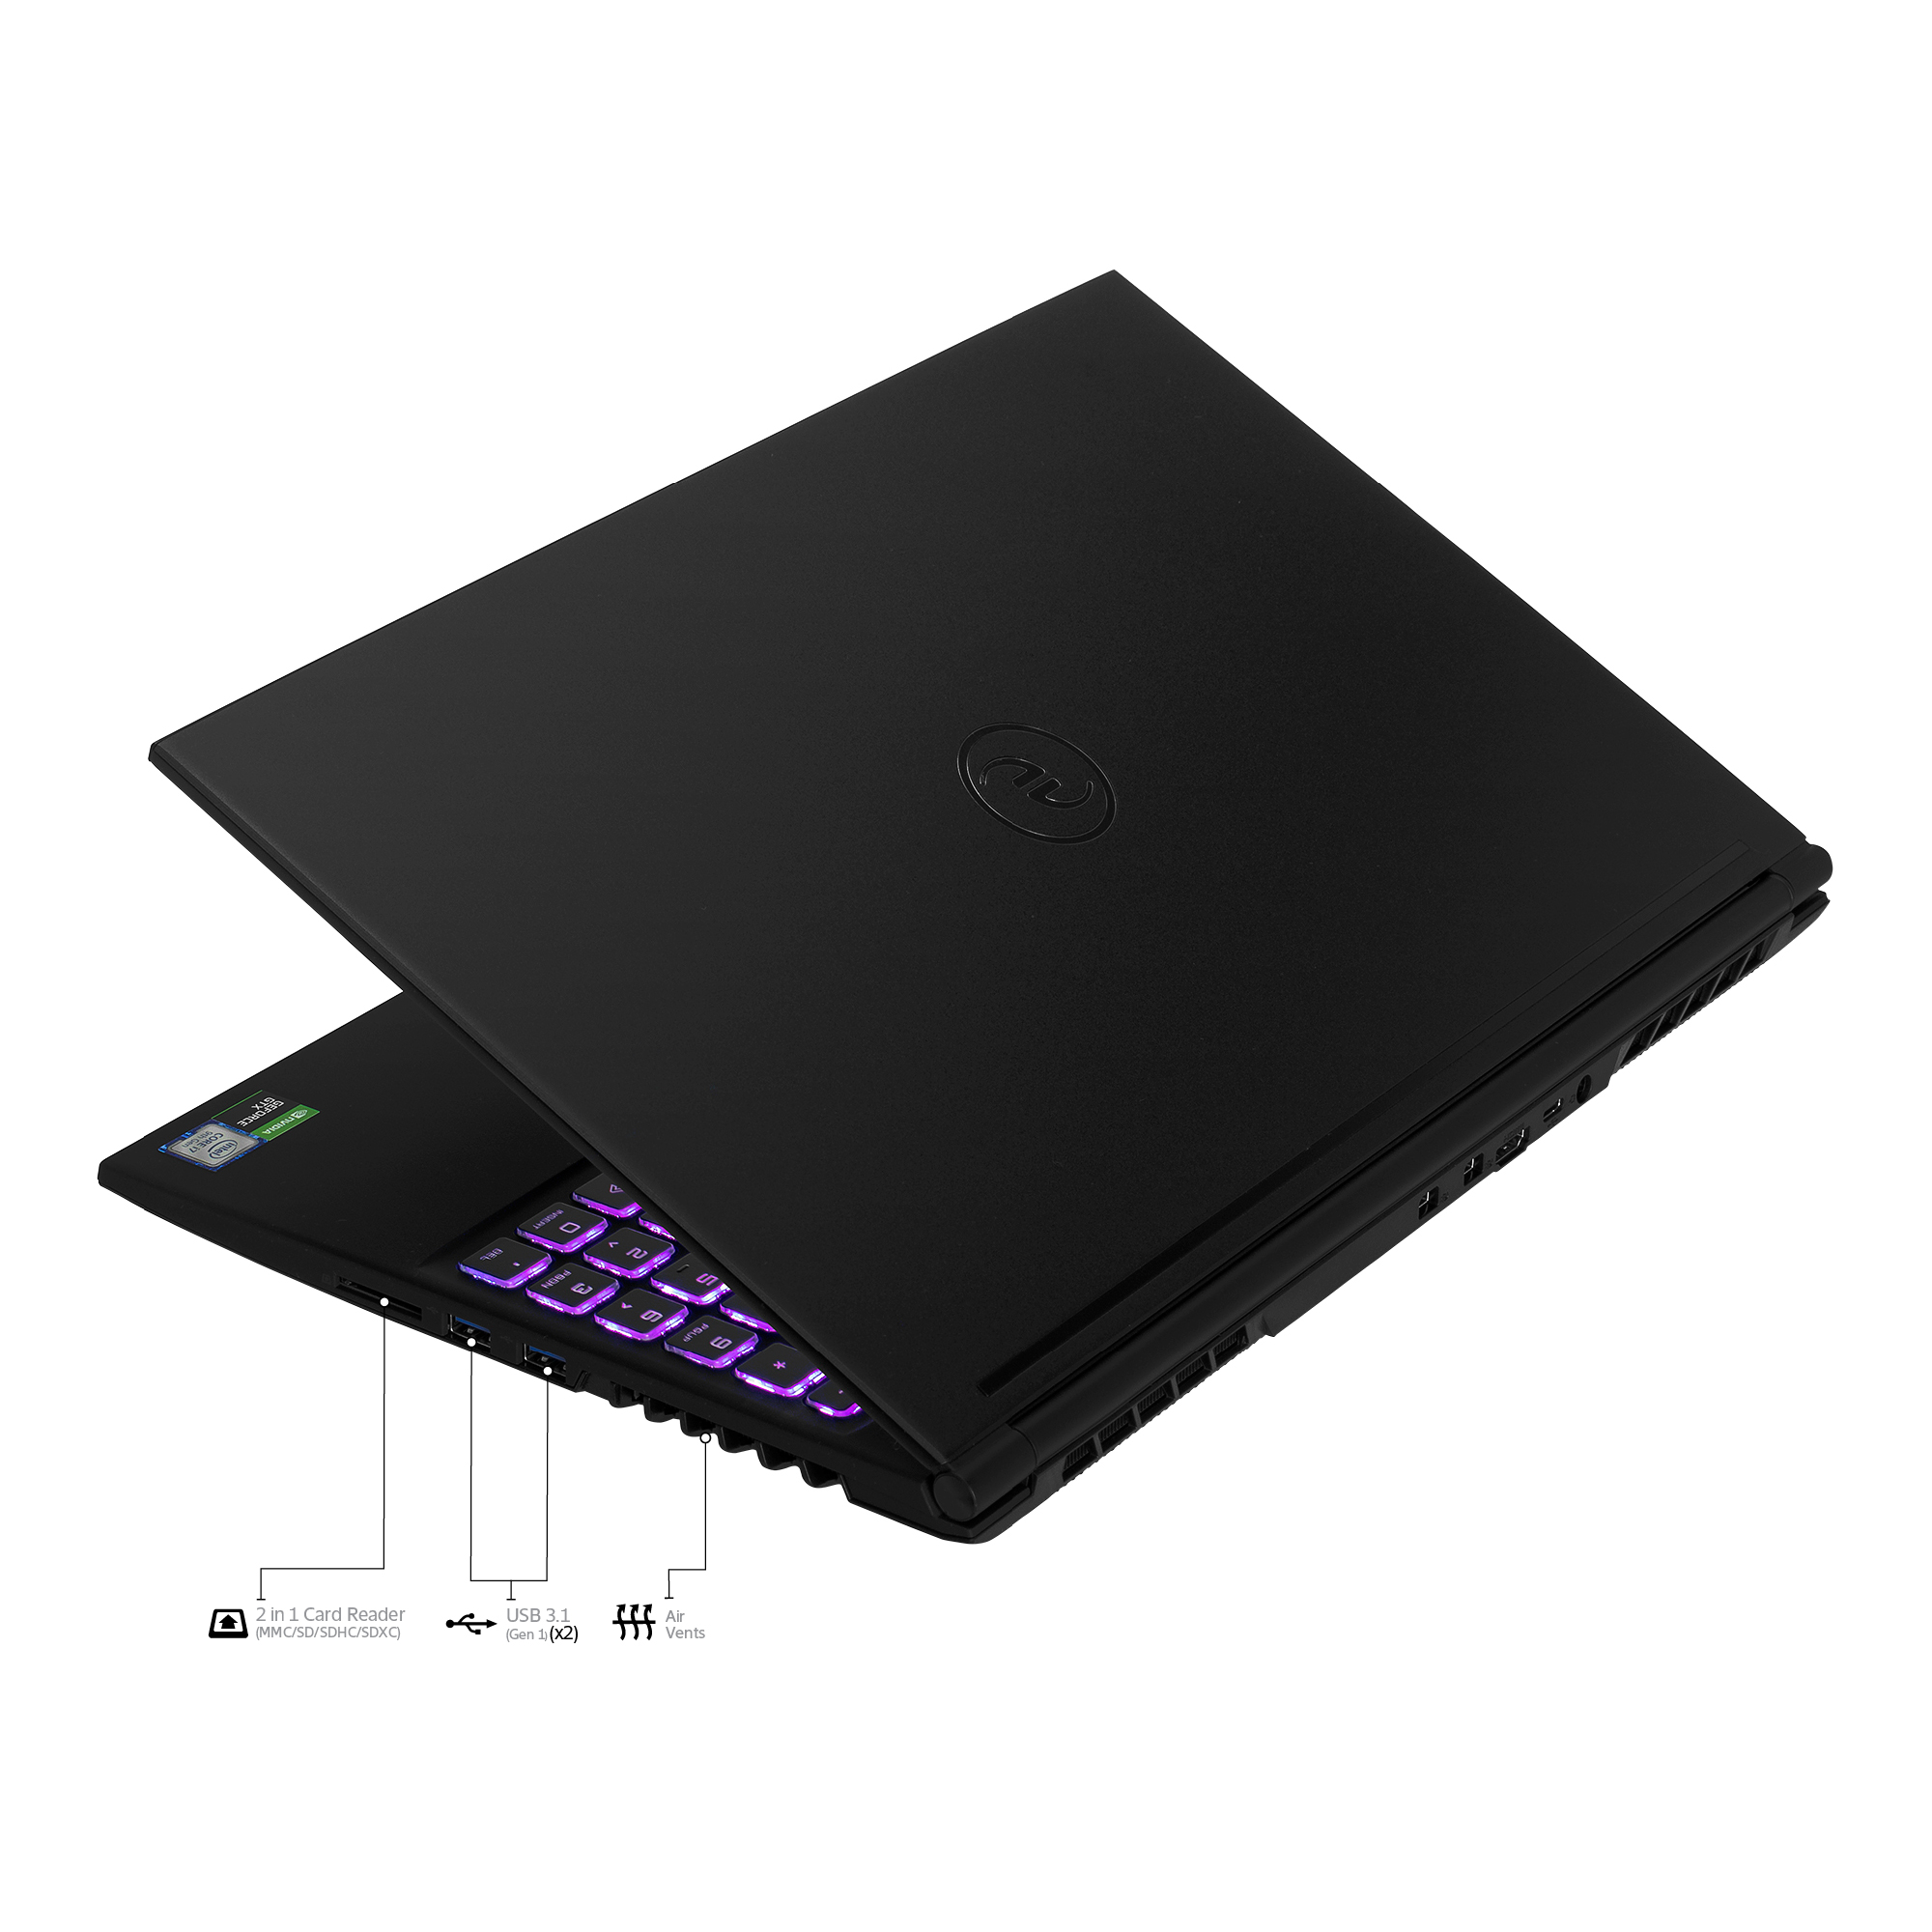 EVOO Gaming Laptop 15" FHD 144Hz Display, THX Spatial Audio, Tuned by THX Display, 9th Gen Intel i7-9750H, Nvidia GTX 1660Ti, 512GB SSD, 16GB Memory, Windows 10 Home, Black - image 4 of 10